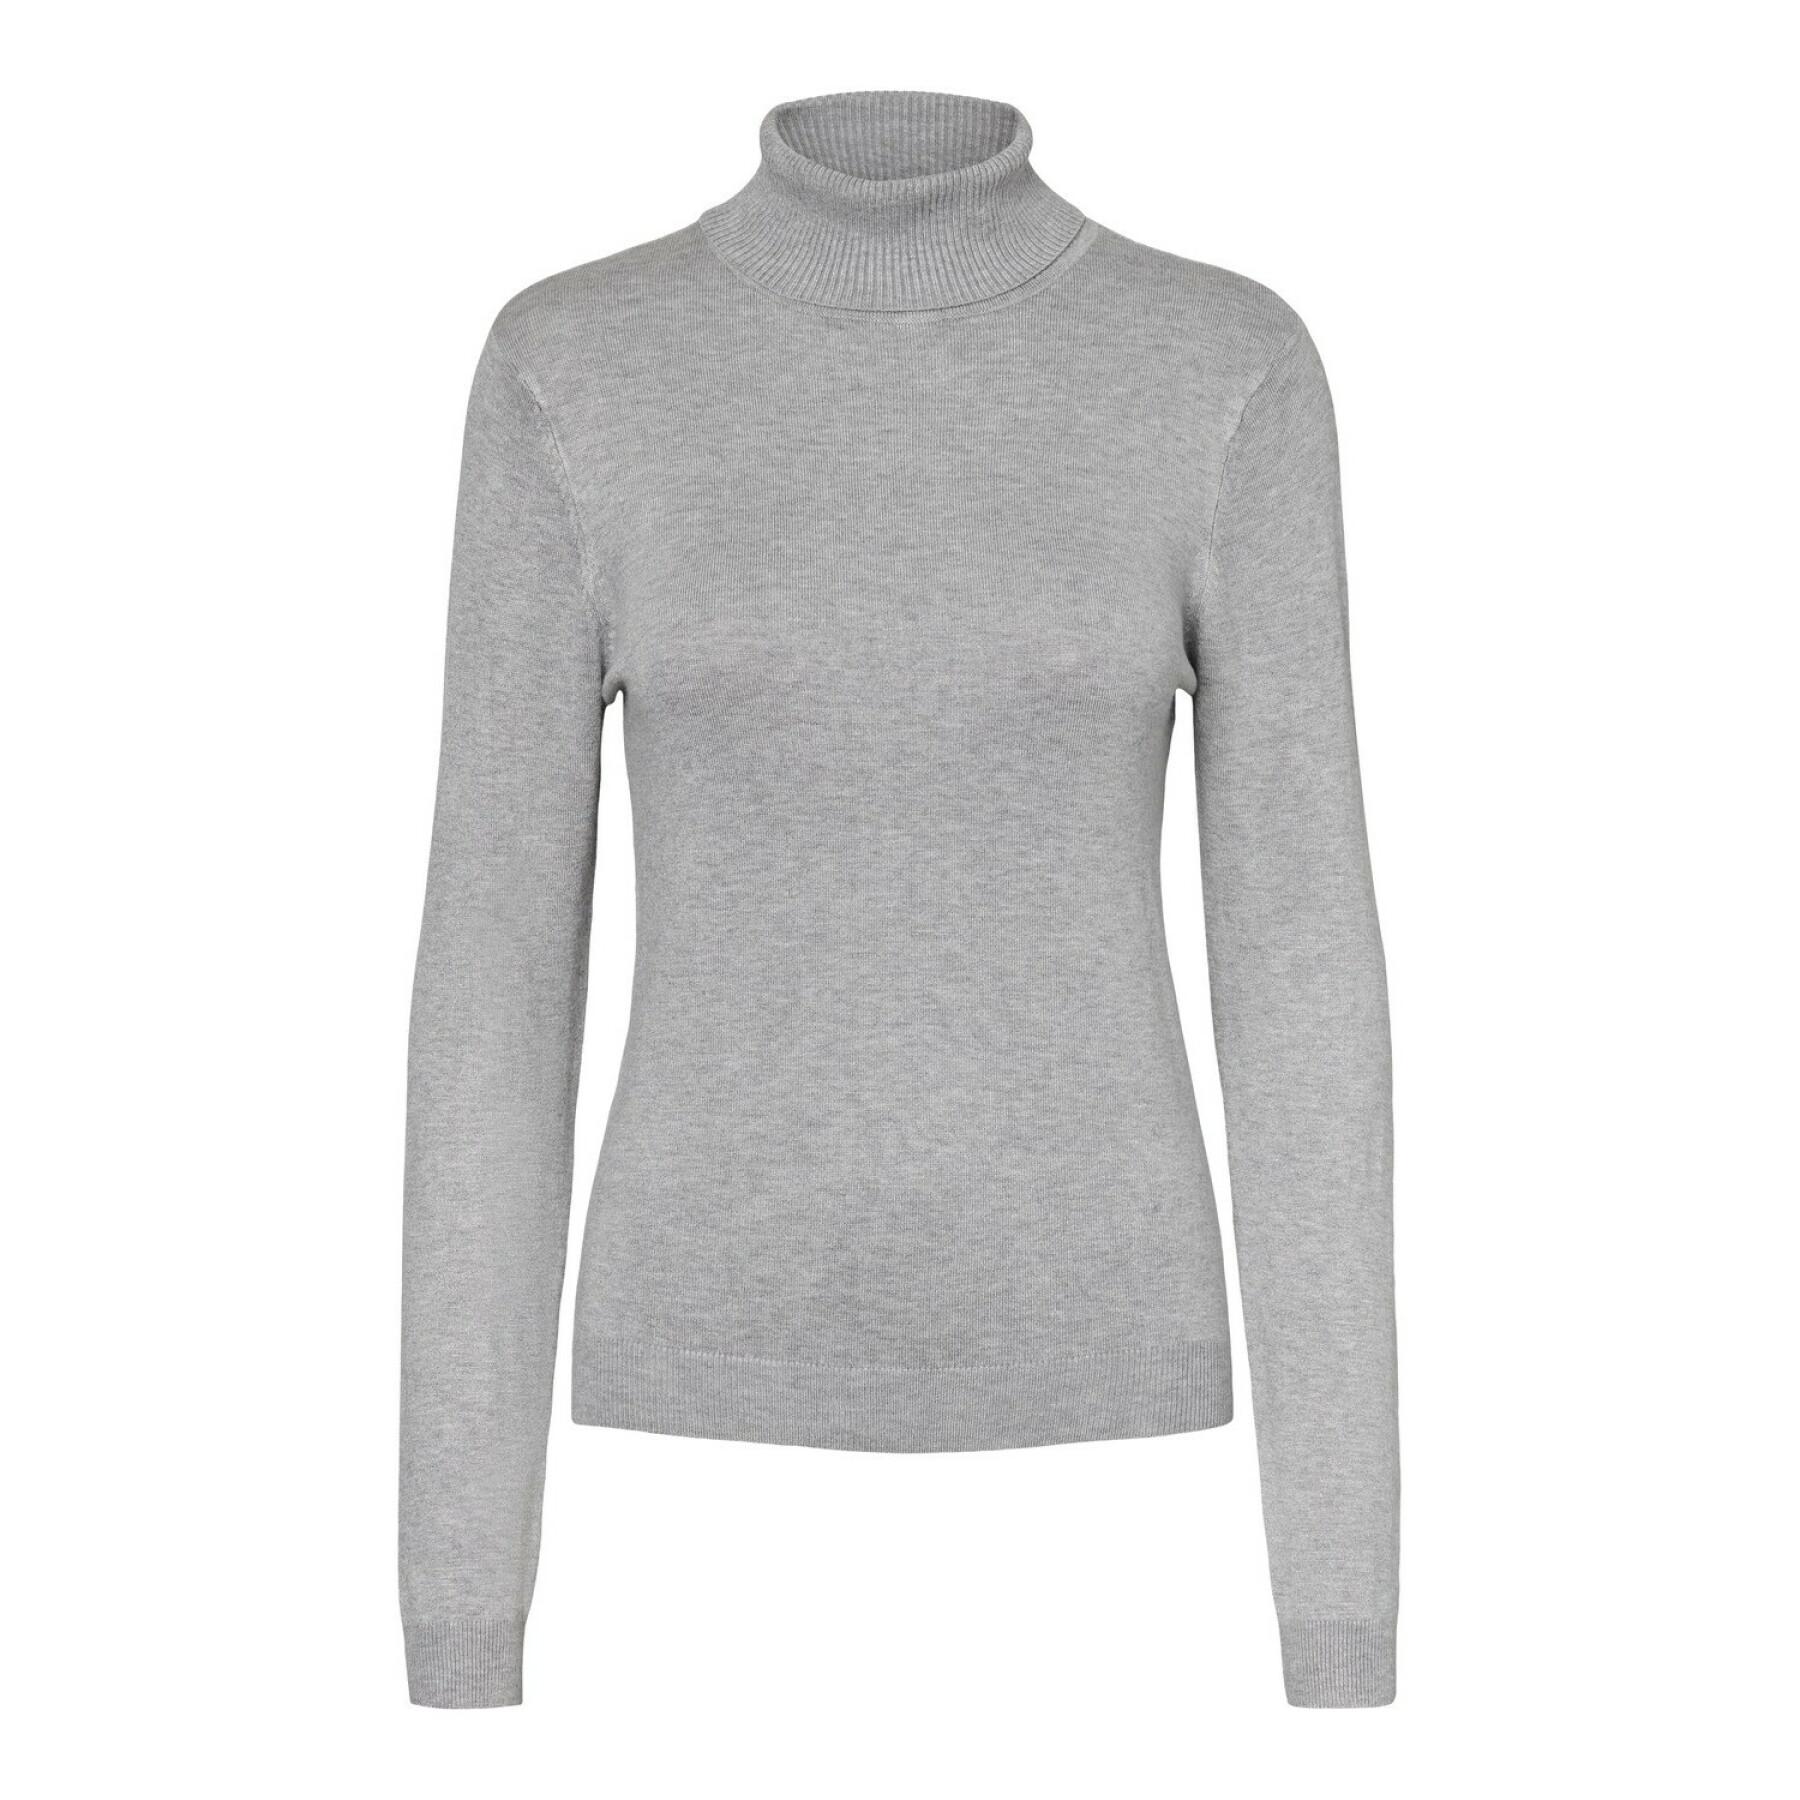 Women's turtleneck sweater Vero Moda vmglory